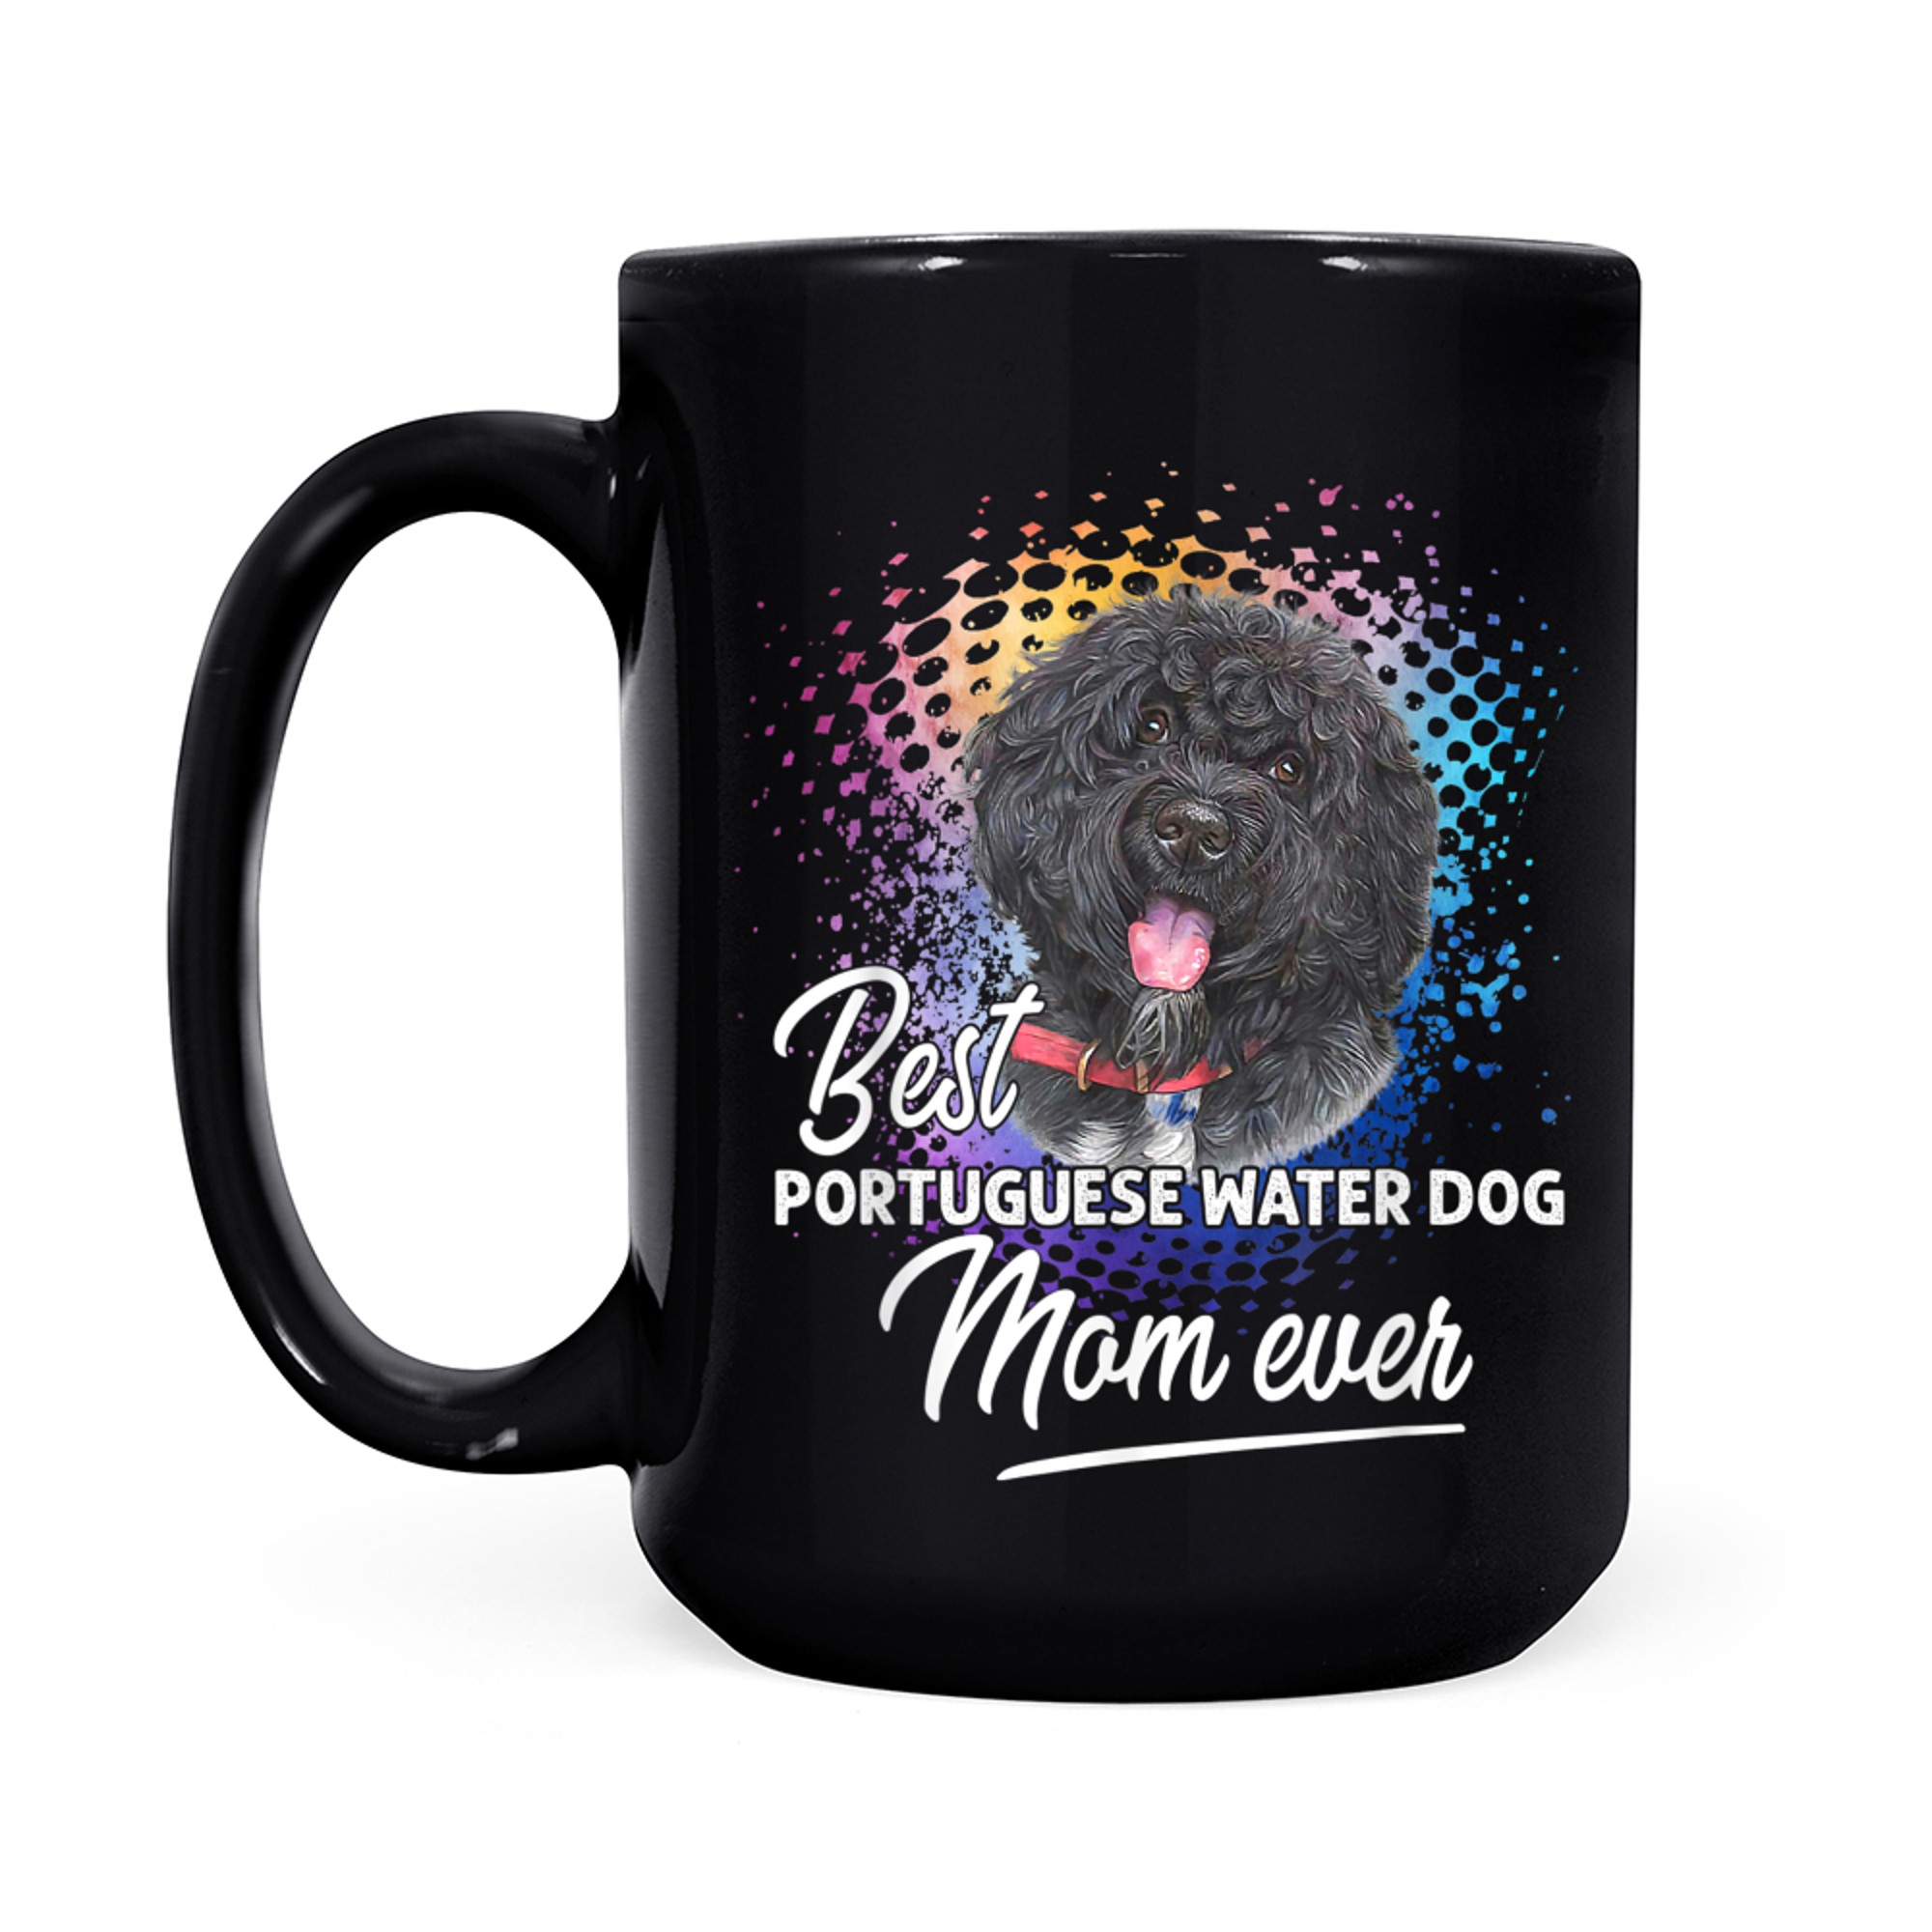 Best Portuguese Water Dog Mom Ever Mother's Day Gift mug black